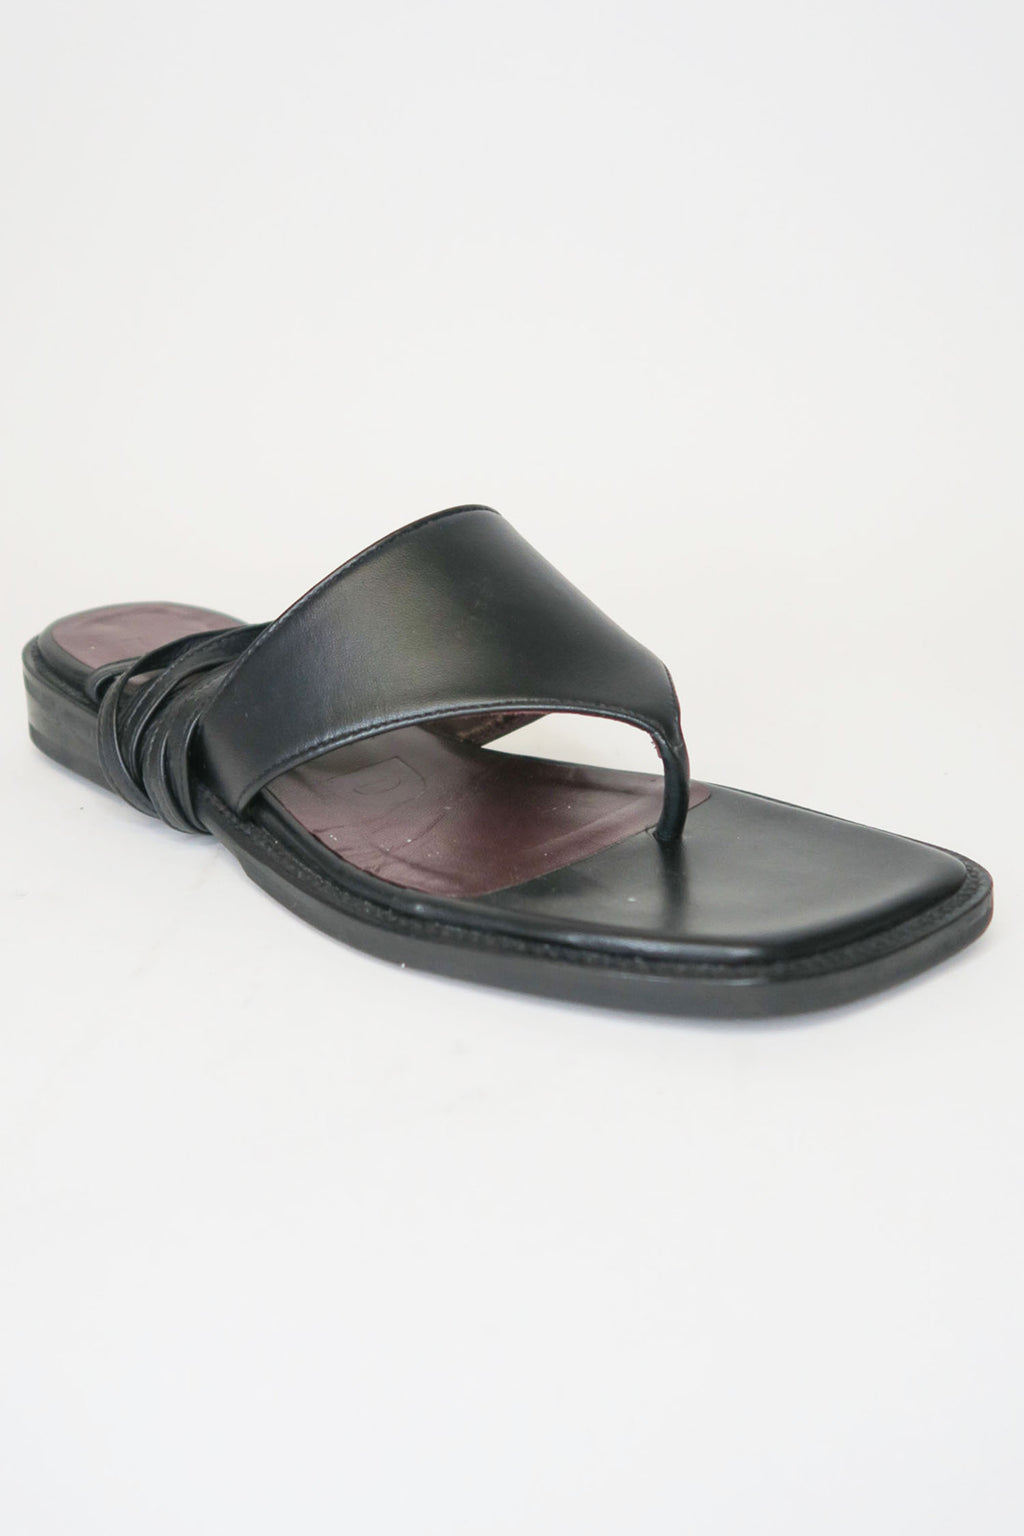 Staud Leather Sandals sz 36